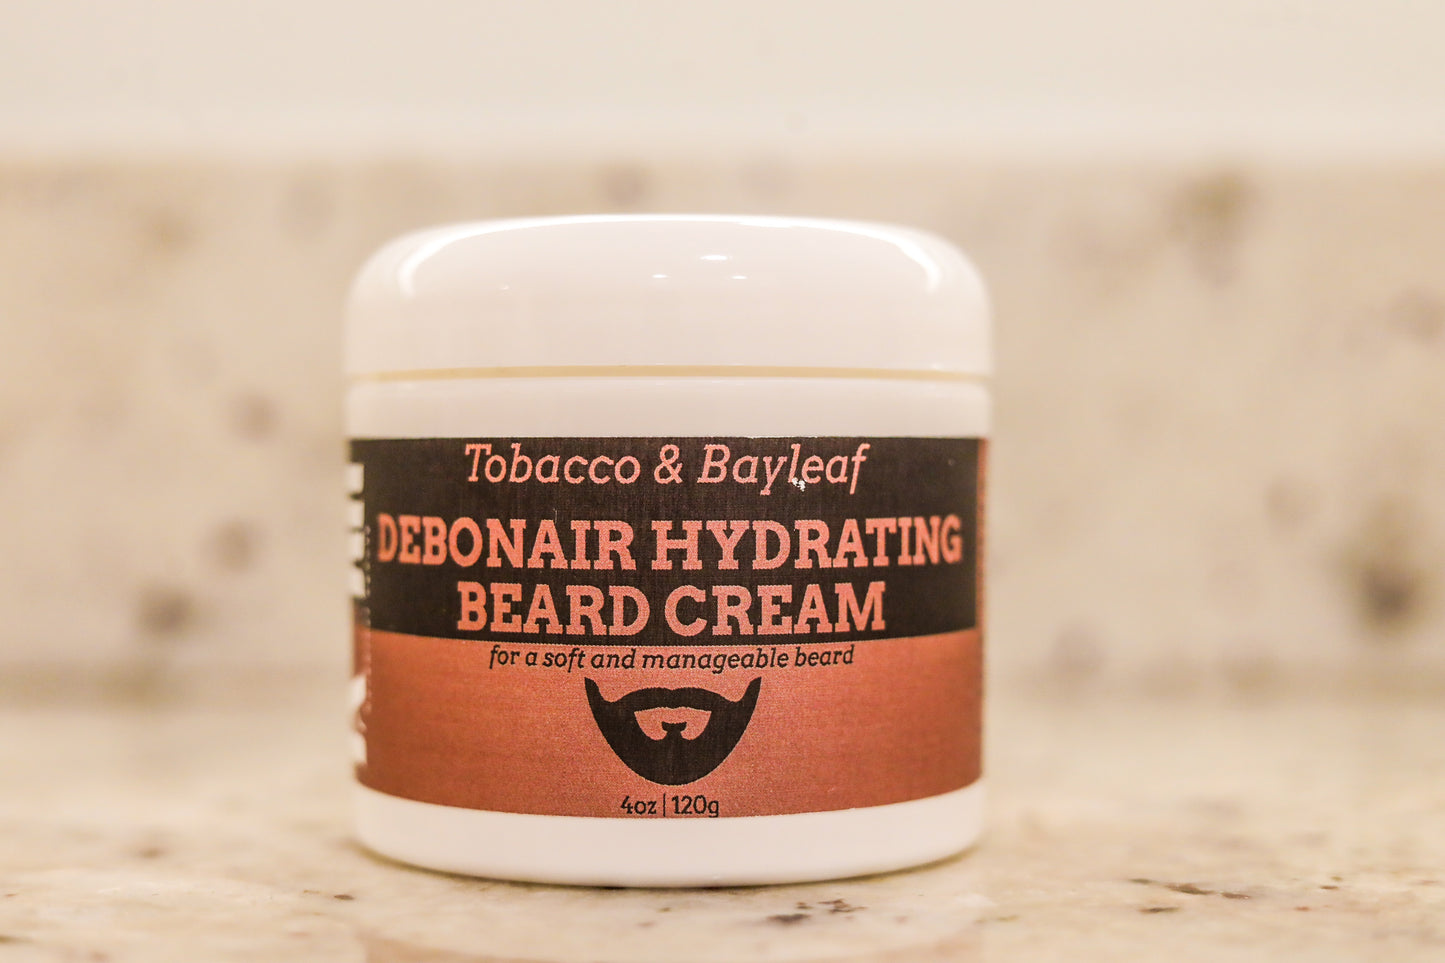 5 gm Sample of Unscented Debonair Hydrating Beard Cream